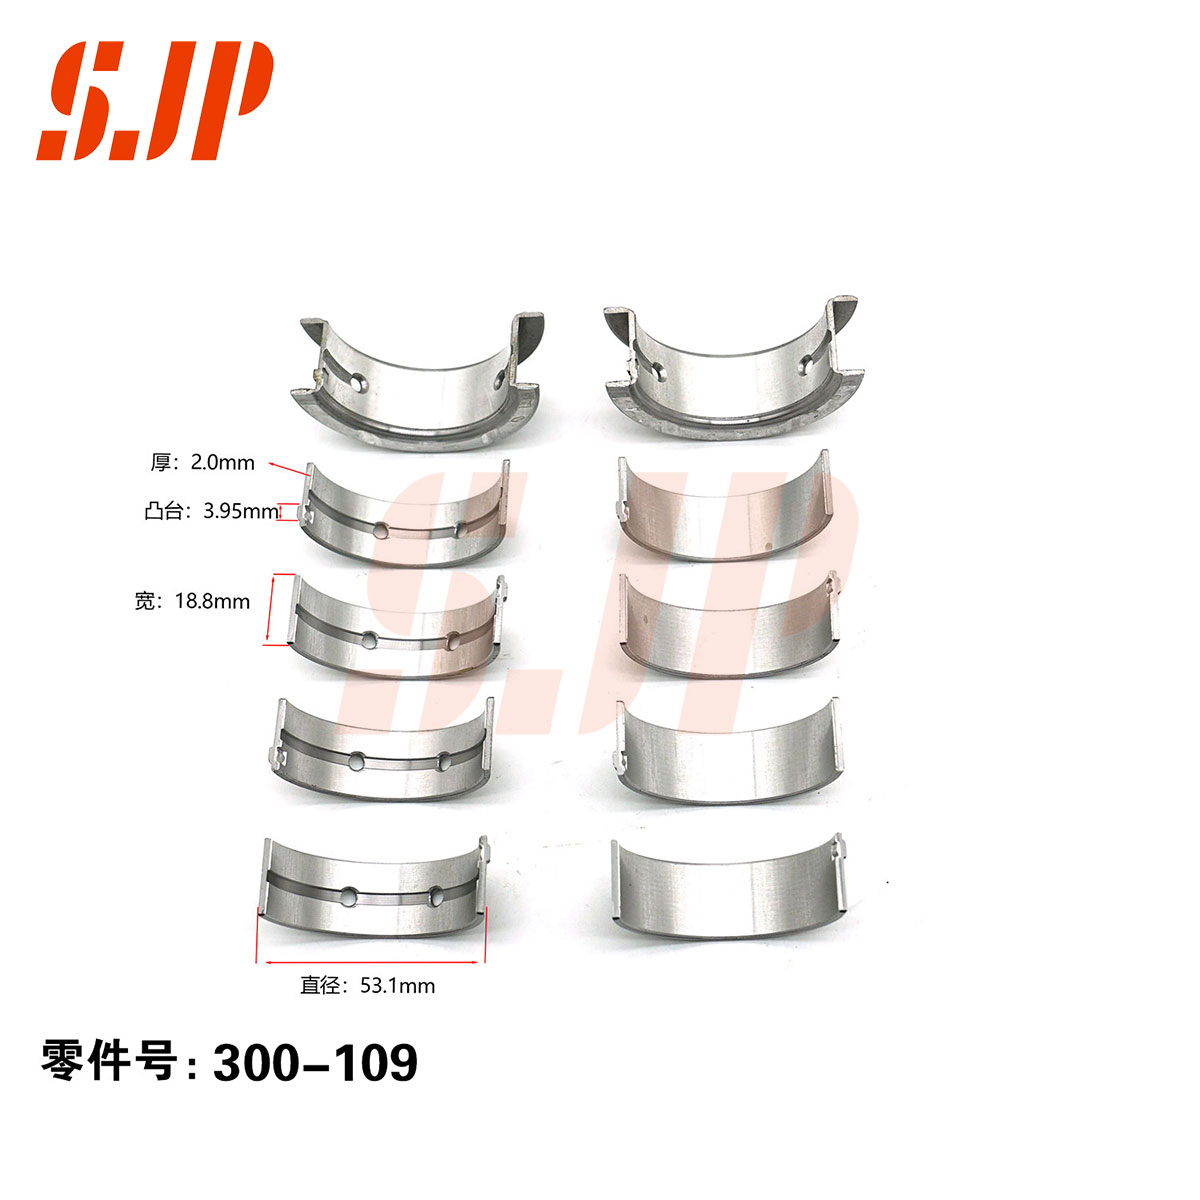 SJ-300-109 Main Bearing Set For 4G15 SUZUKI Changhe Liana 1.5